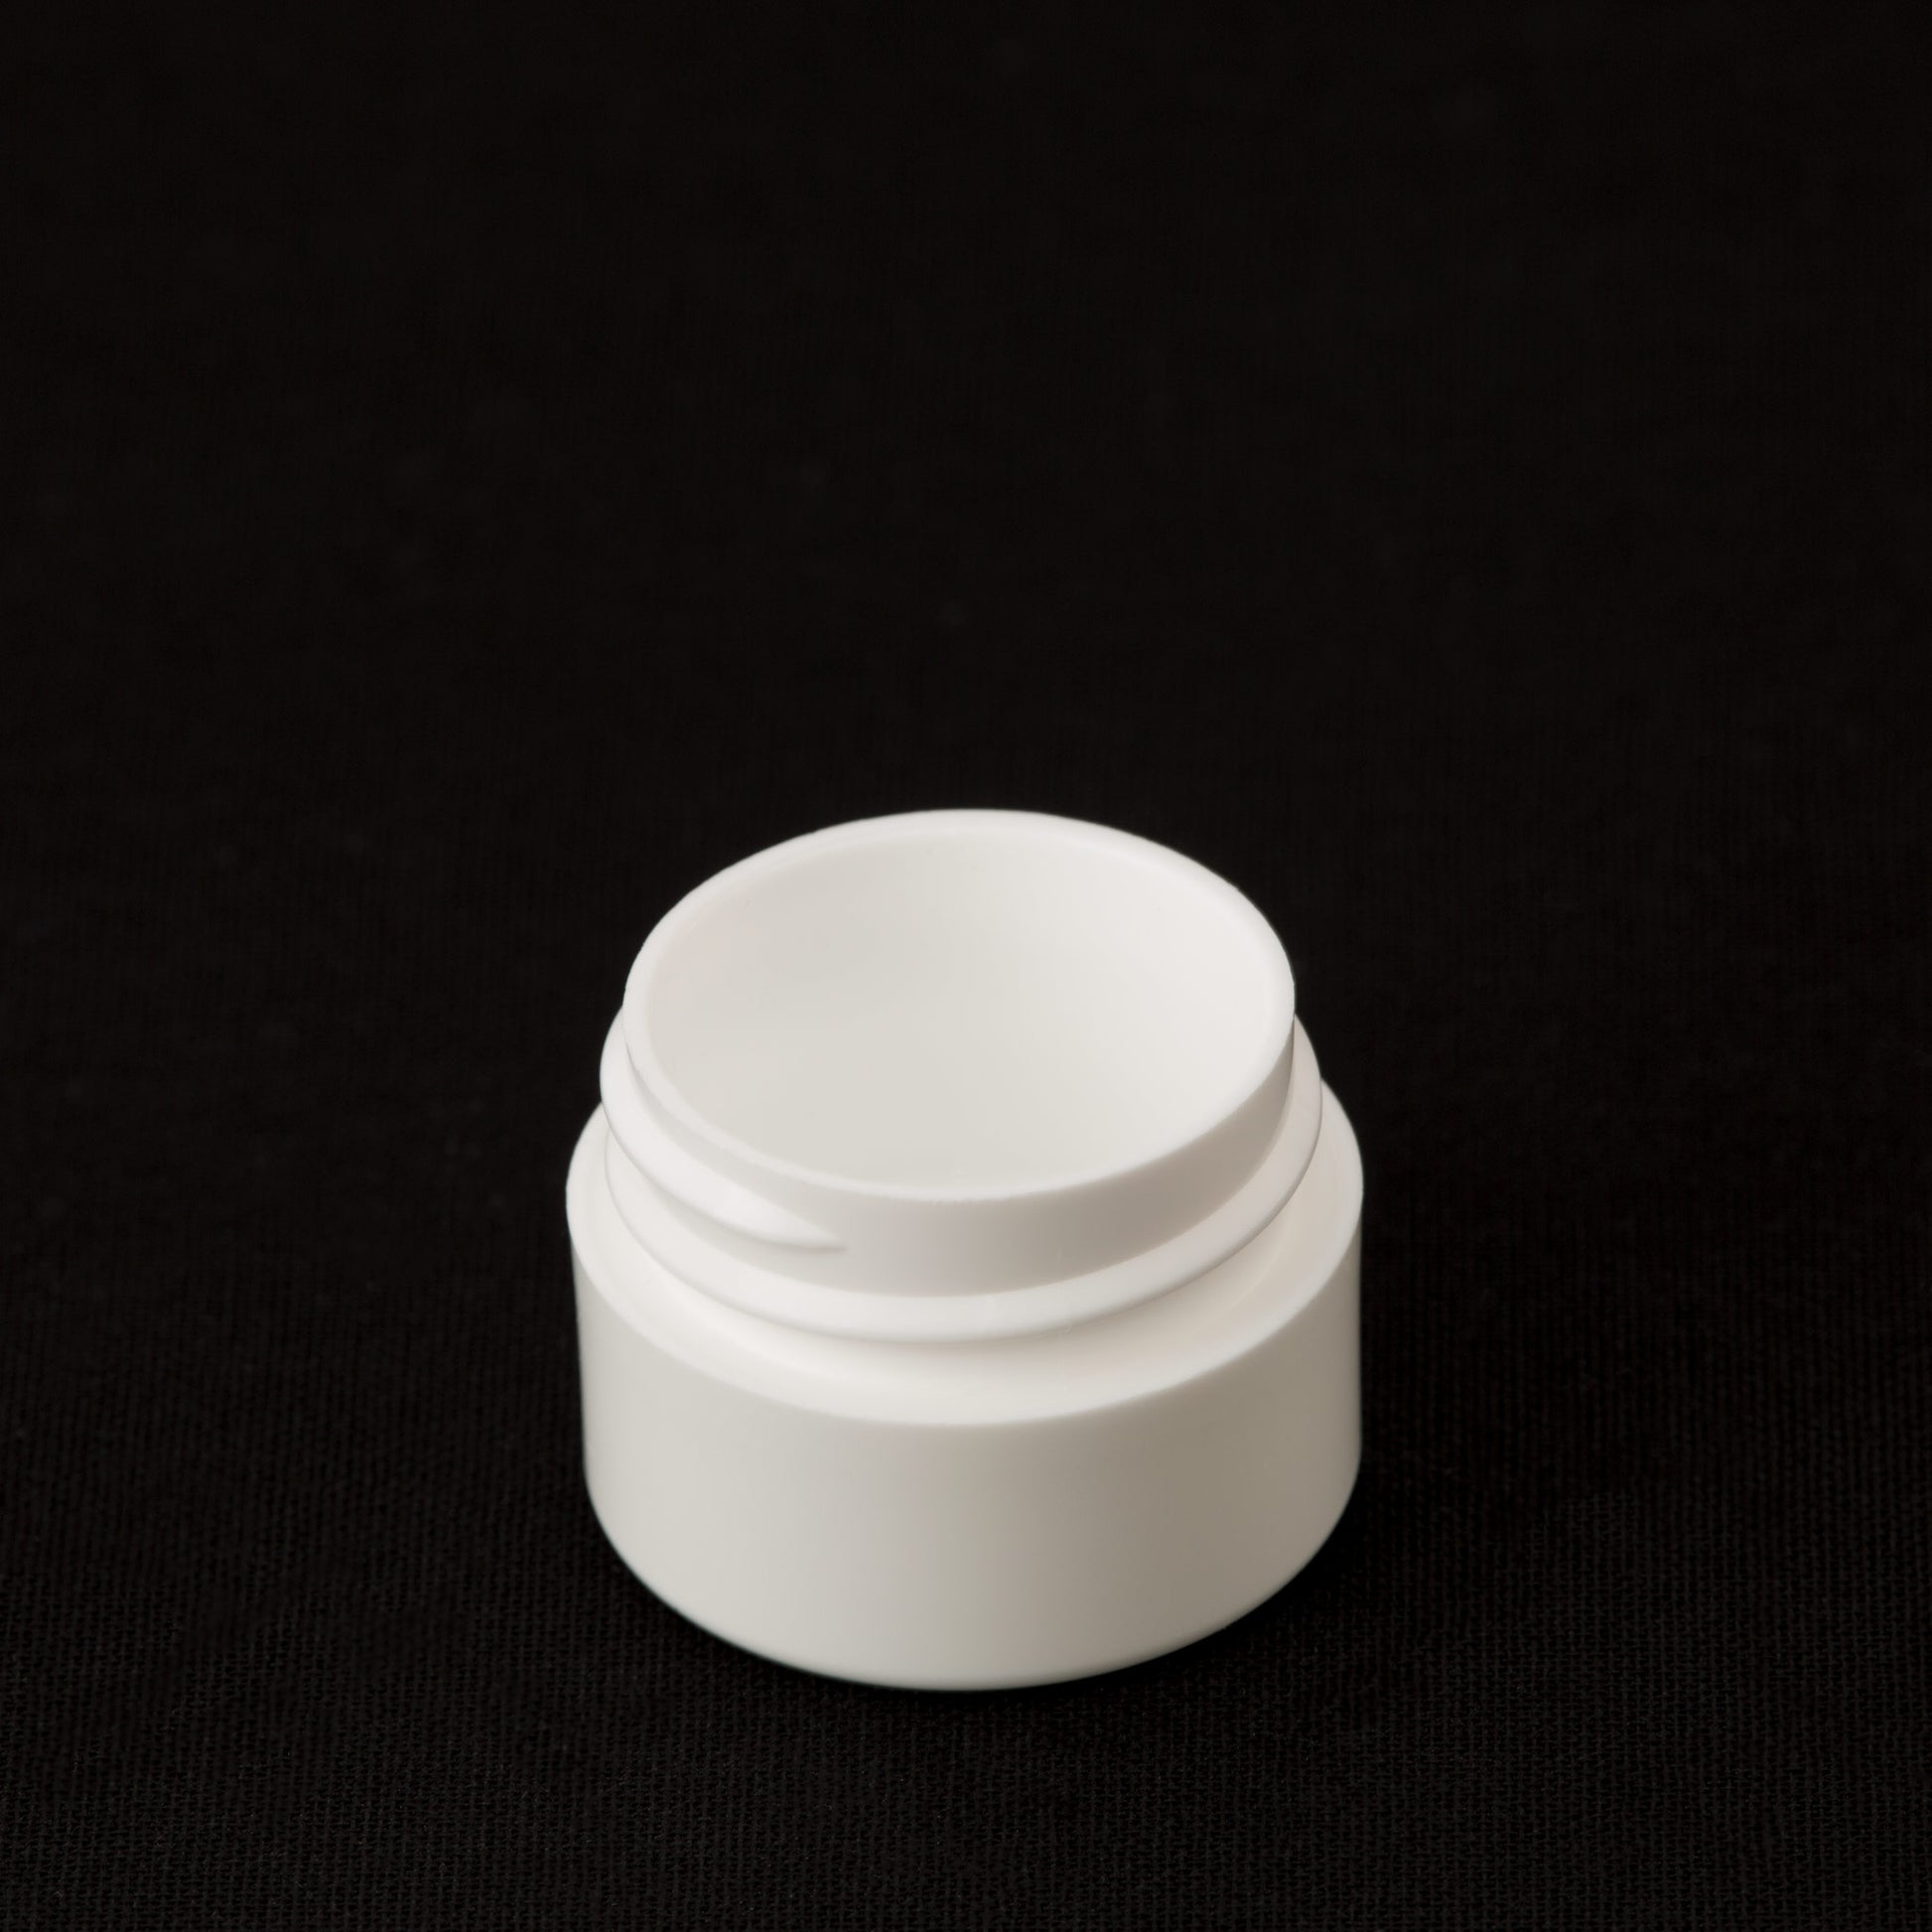 .25 oz / 7.5 ml White Lip Balm Jar with No Closure